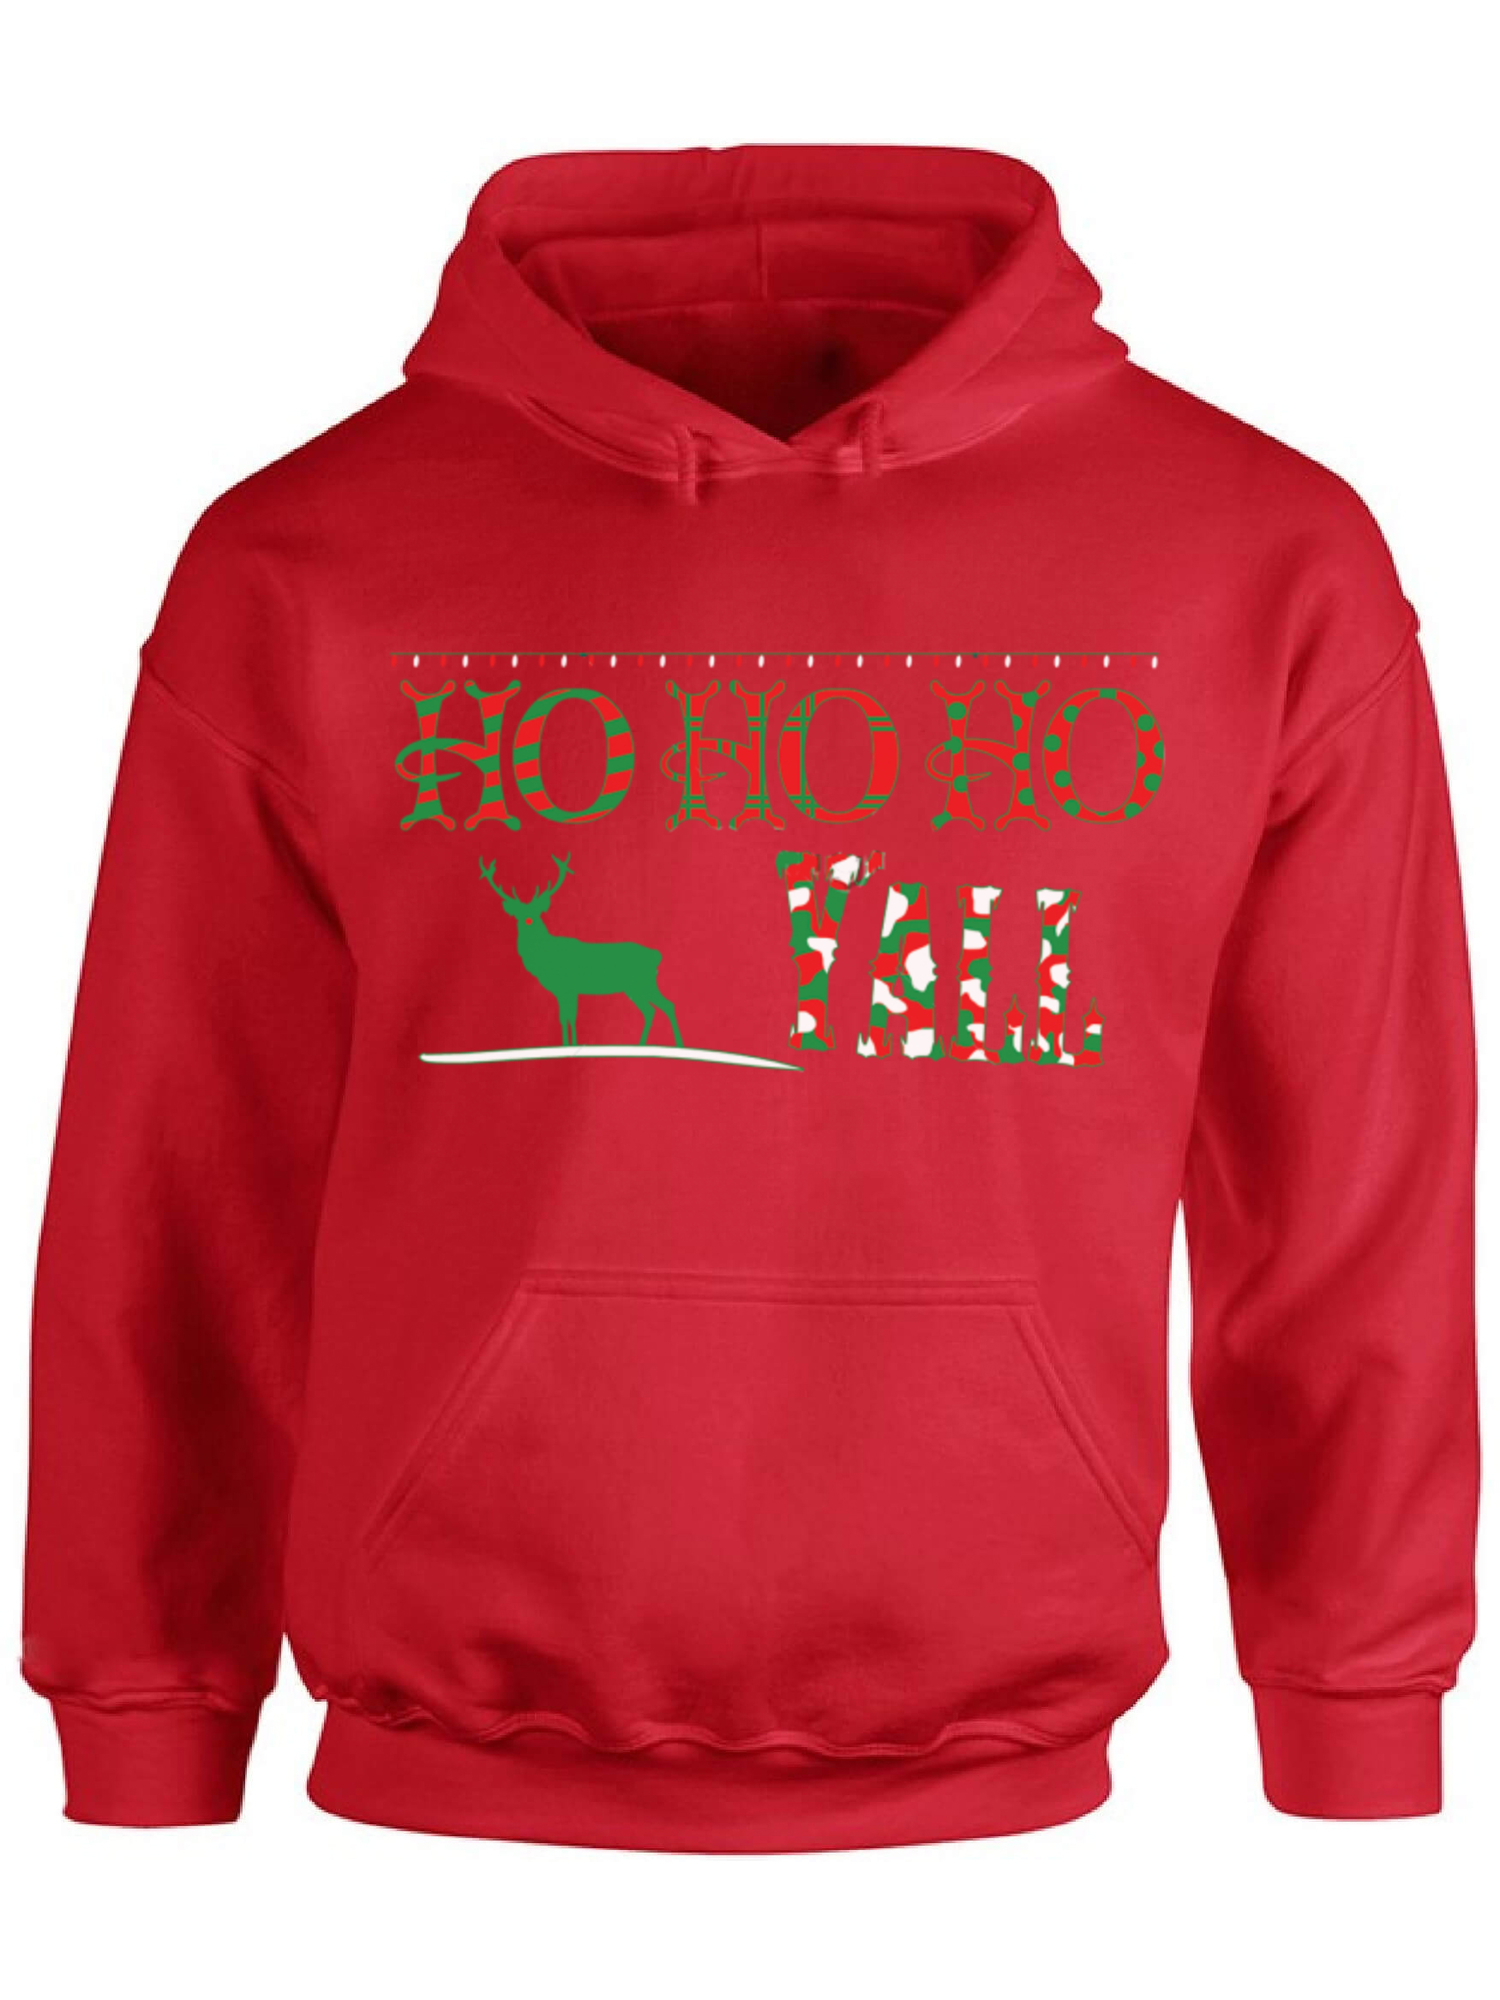 Awkward Styles Ho Ho Ho Yall Christmas Sweatshirt Christmas Reindeer Christmas Hoodie Holiday Sweatshirt Ugly Christmas Sweater Xmas Hooded Sweatshirt Christmas Sweatshirt for Men for Women - image 1 of 5